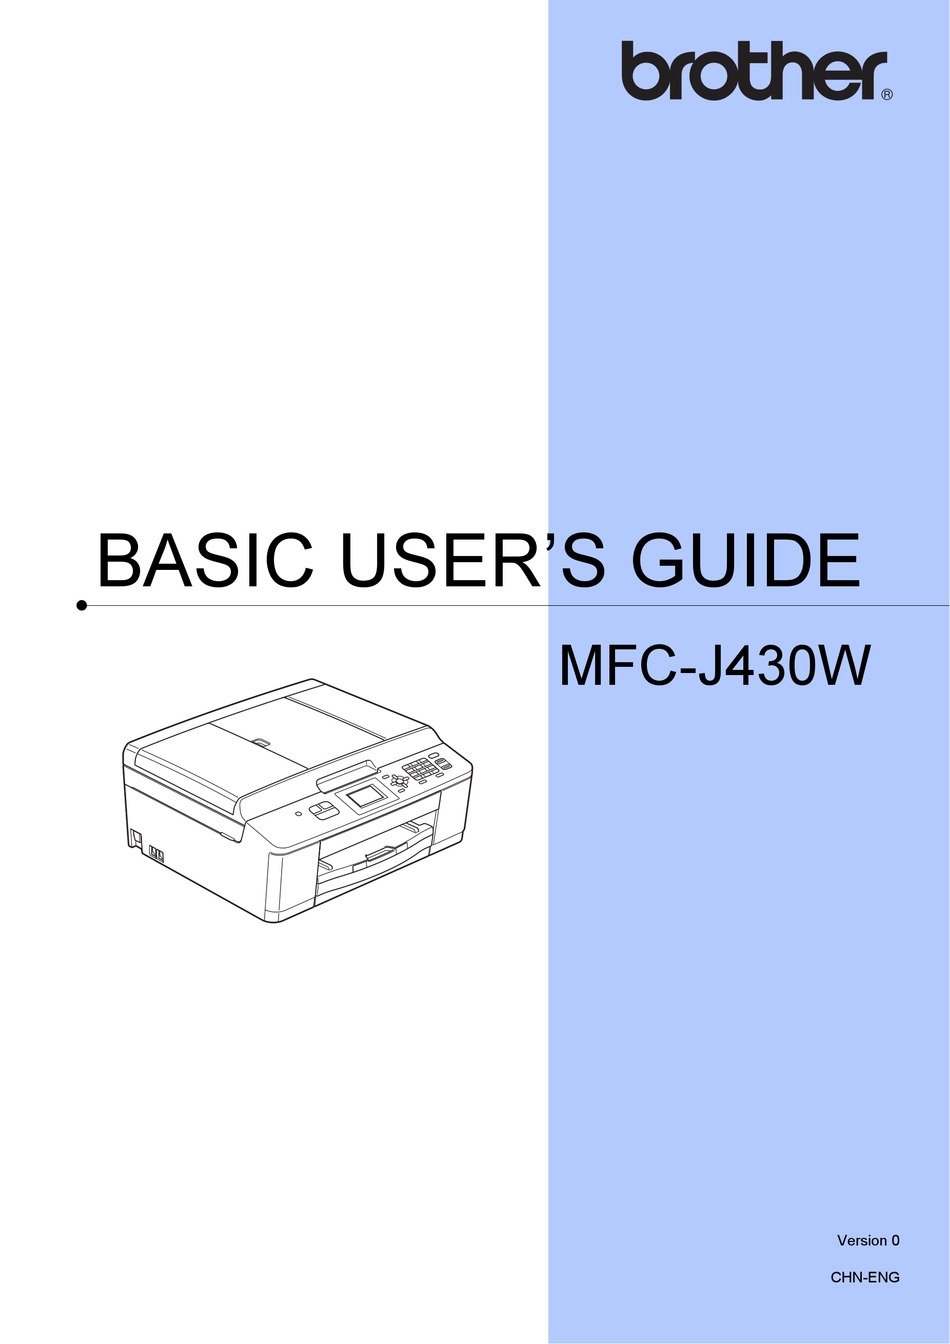 Ja Taalkunde Kent BROTHER MFC-J430W BASIC USER'S MANUAL Pdf Download | ManualsLib